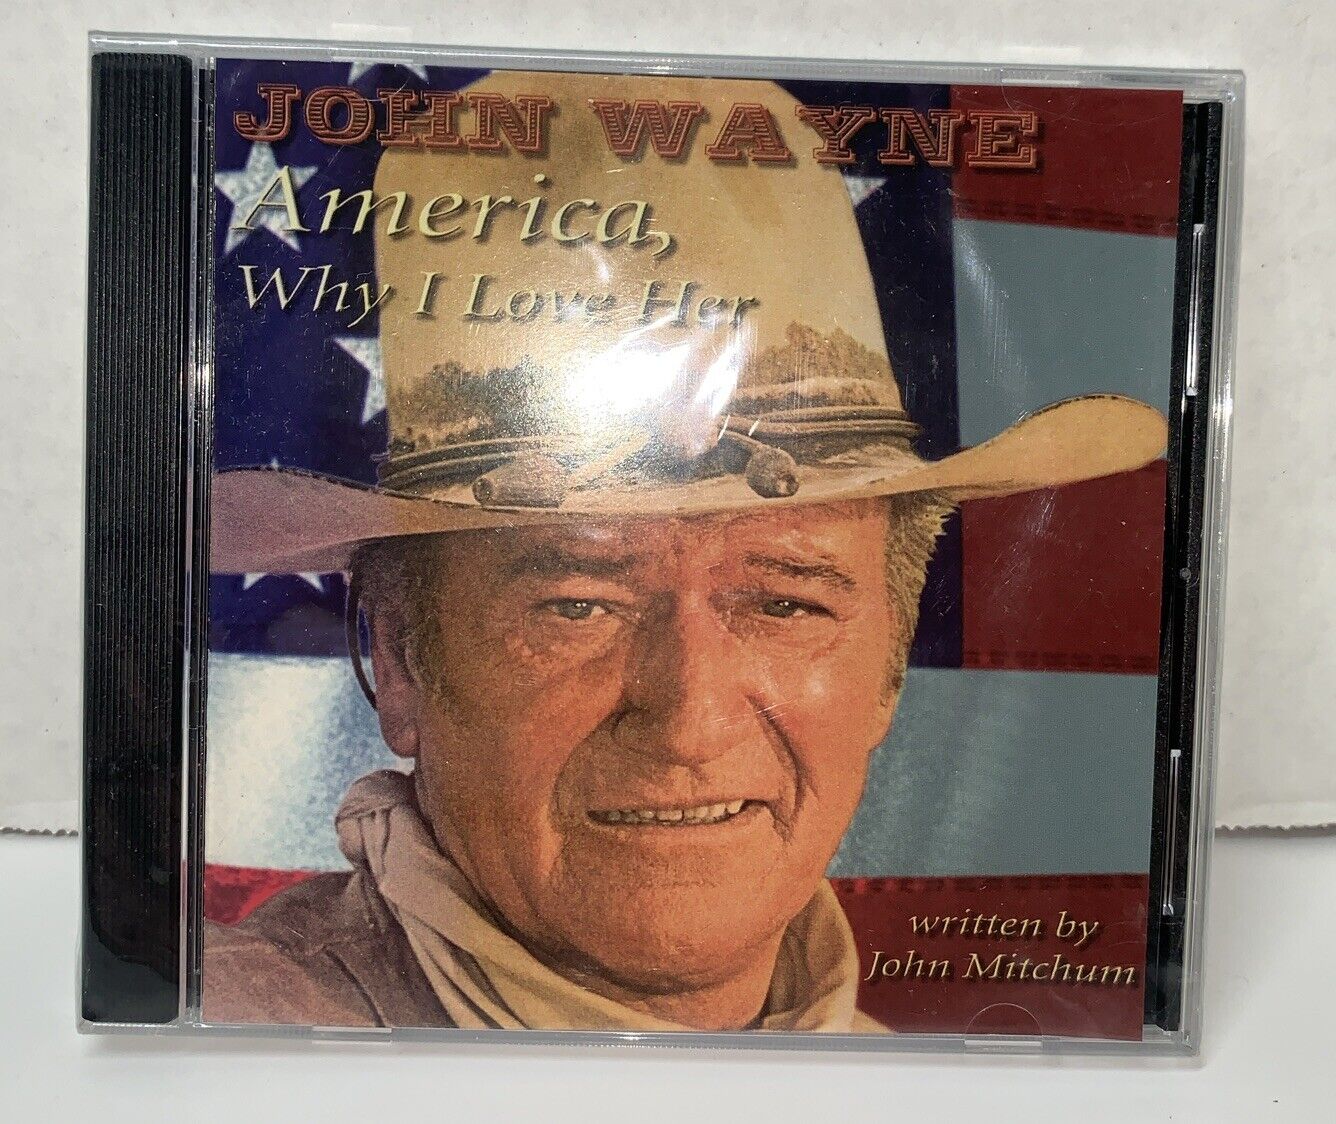 America, Why I Love Her by John Wayne (CD, 2001) Brand New Sealed